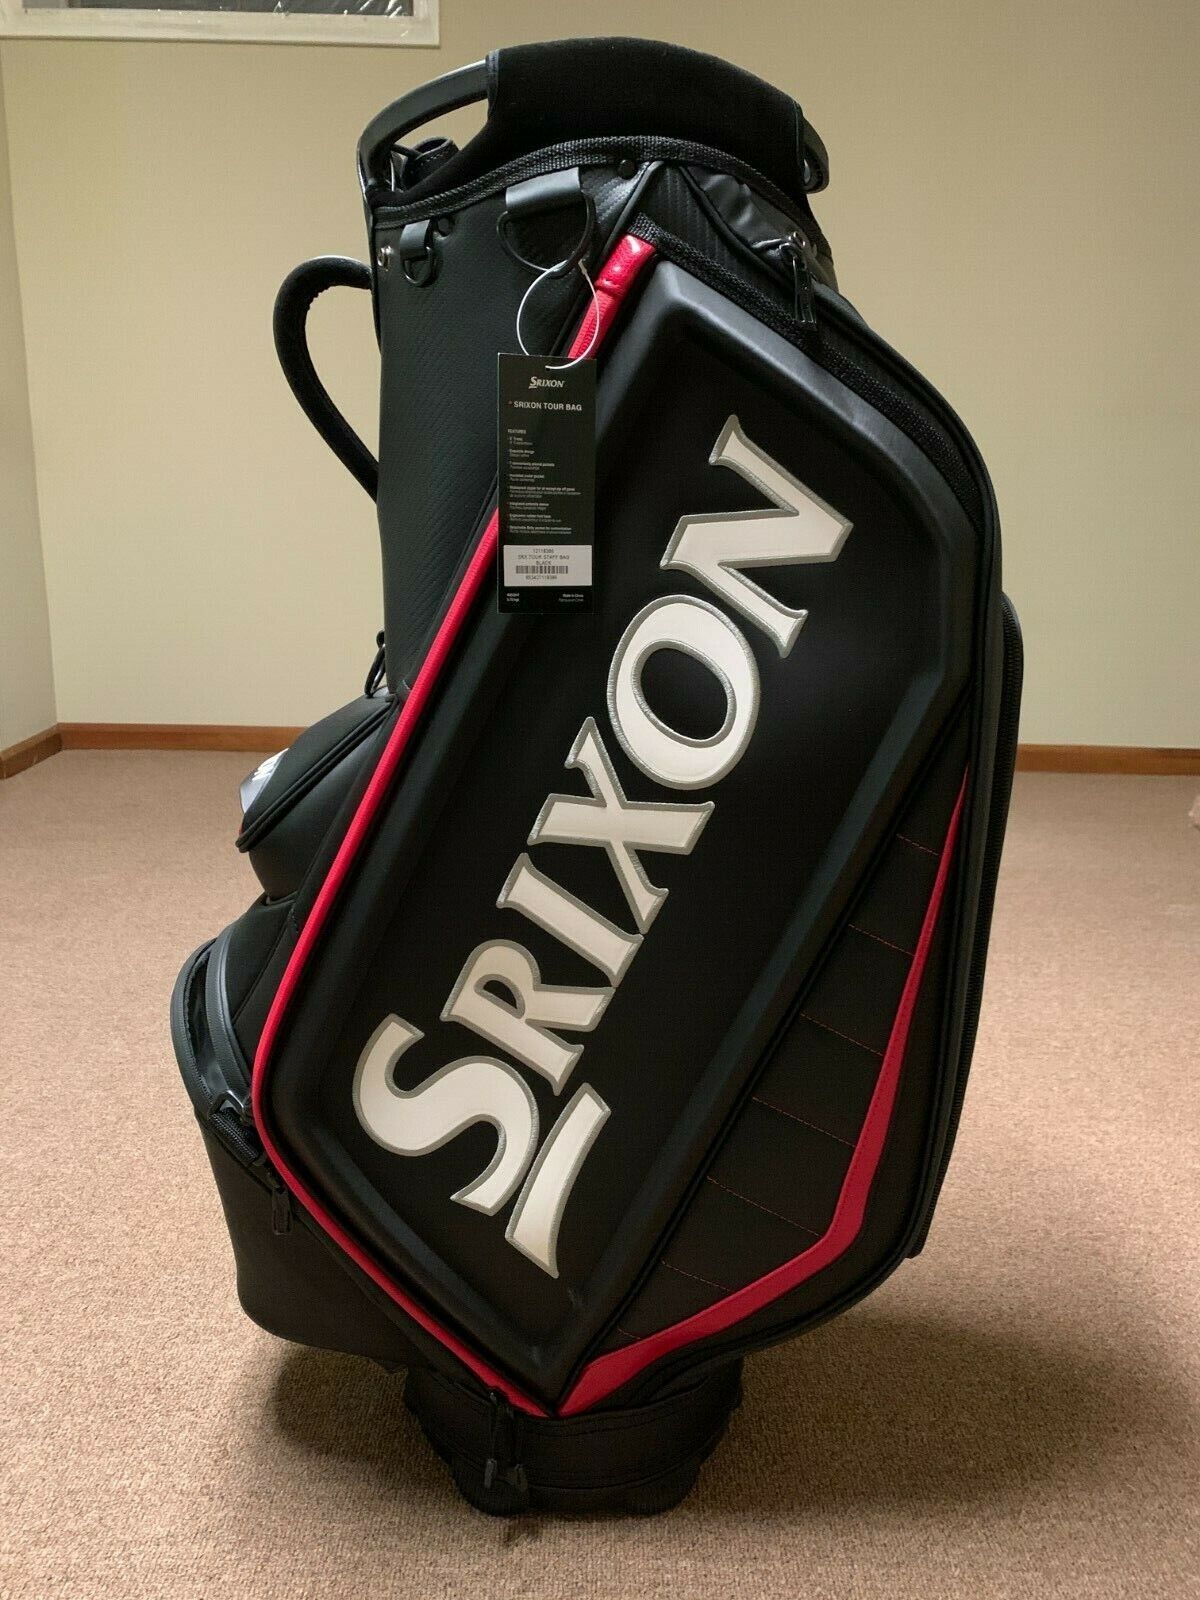 Srixon Tour Staff Bag - Black/Red - 5 Way Dividers - NEW